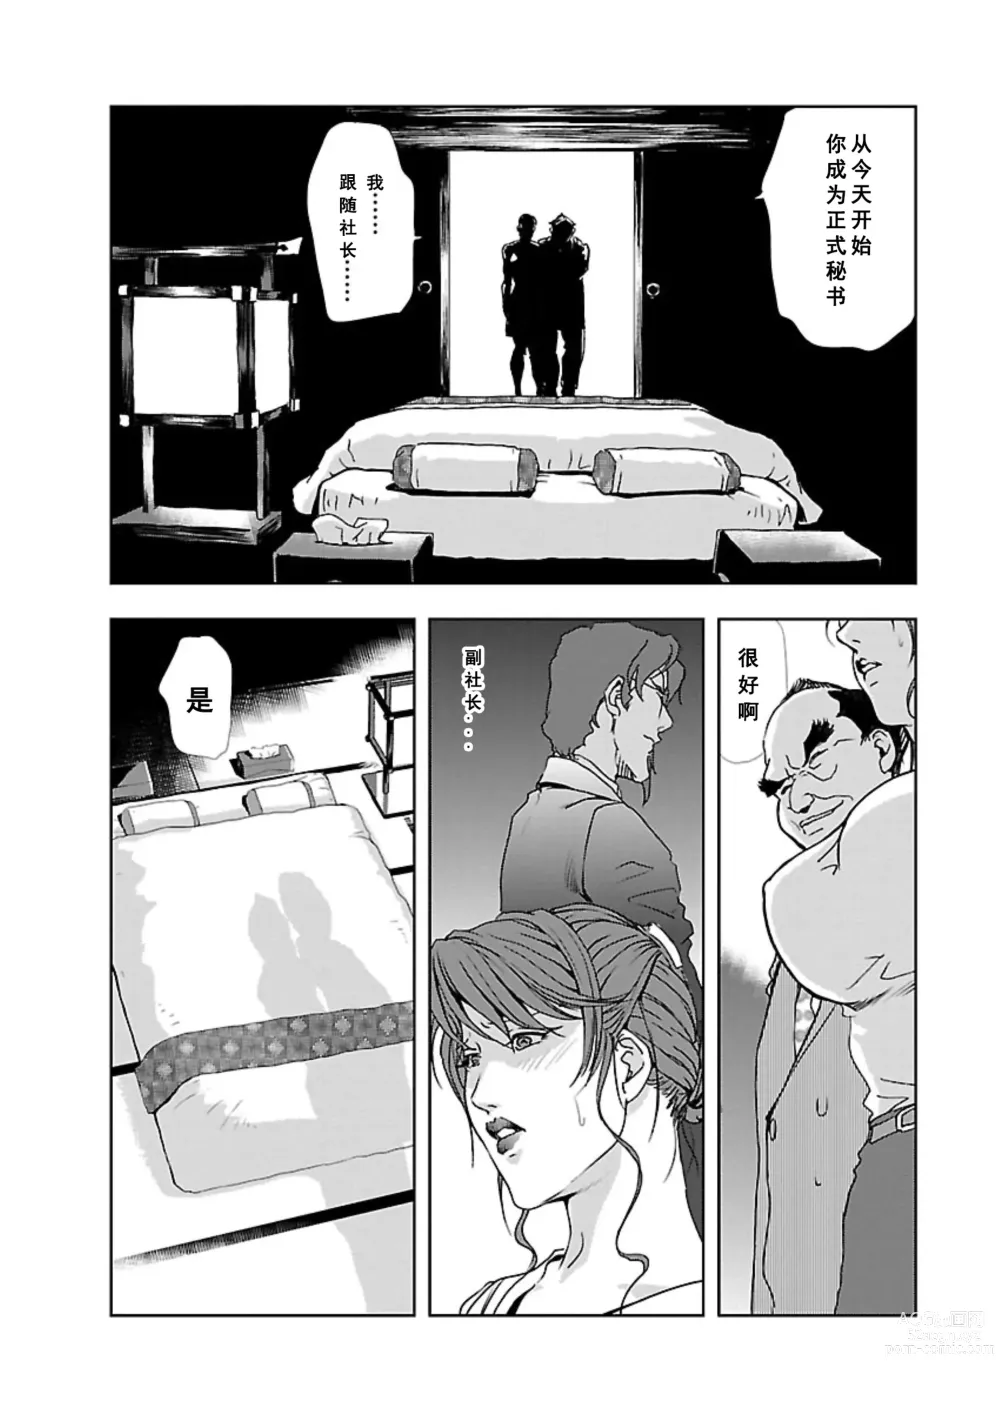 Page 139 of manga Nikuhisyo Yukiko Vol.01